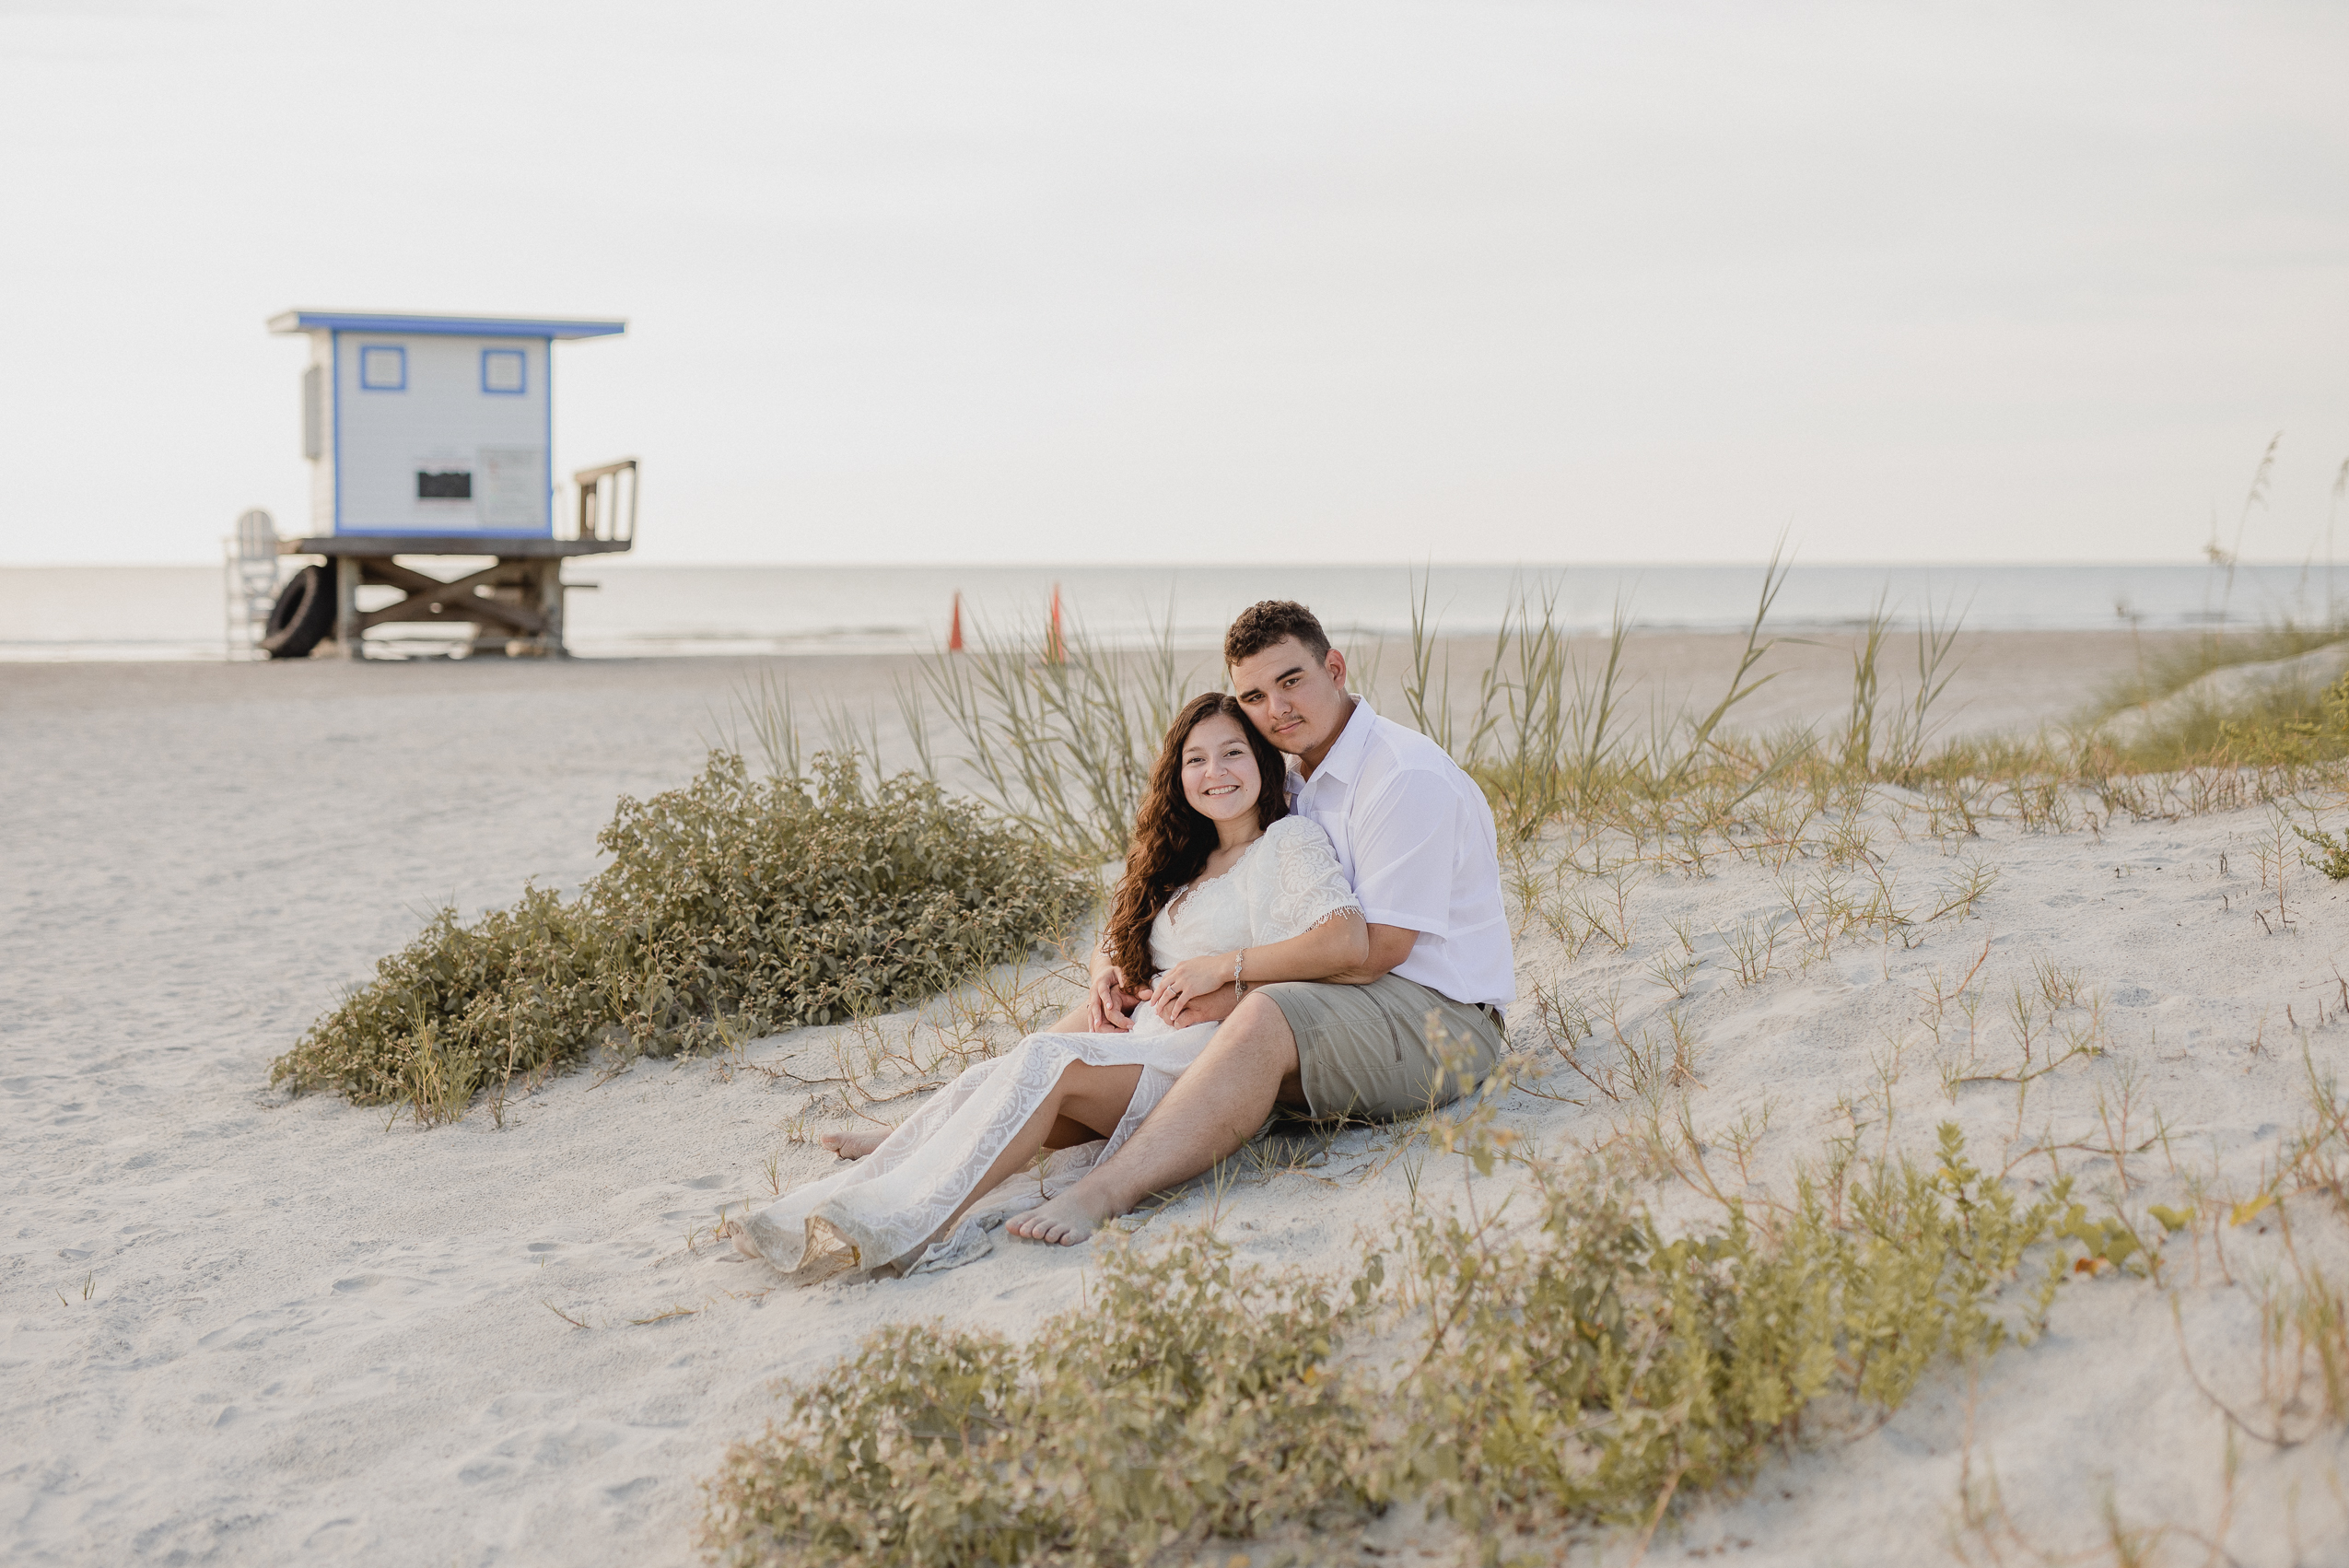 Jetty Park Beach Port Cape Canaveral Orlando Destination Elopement Wedding Couples Photographer